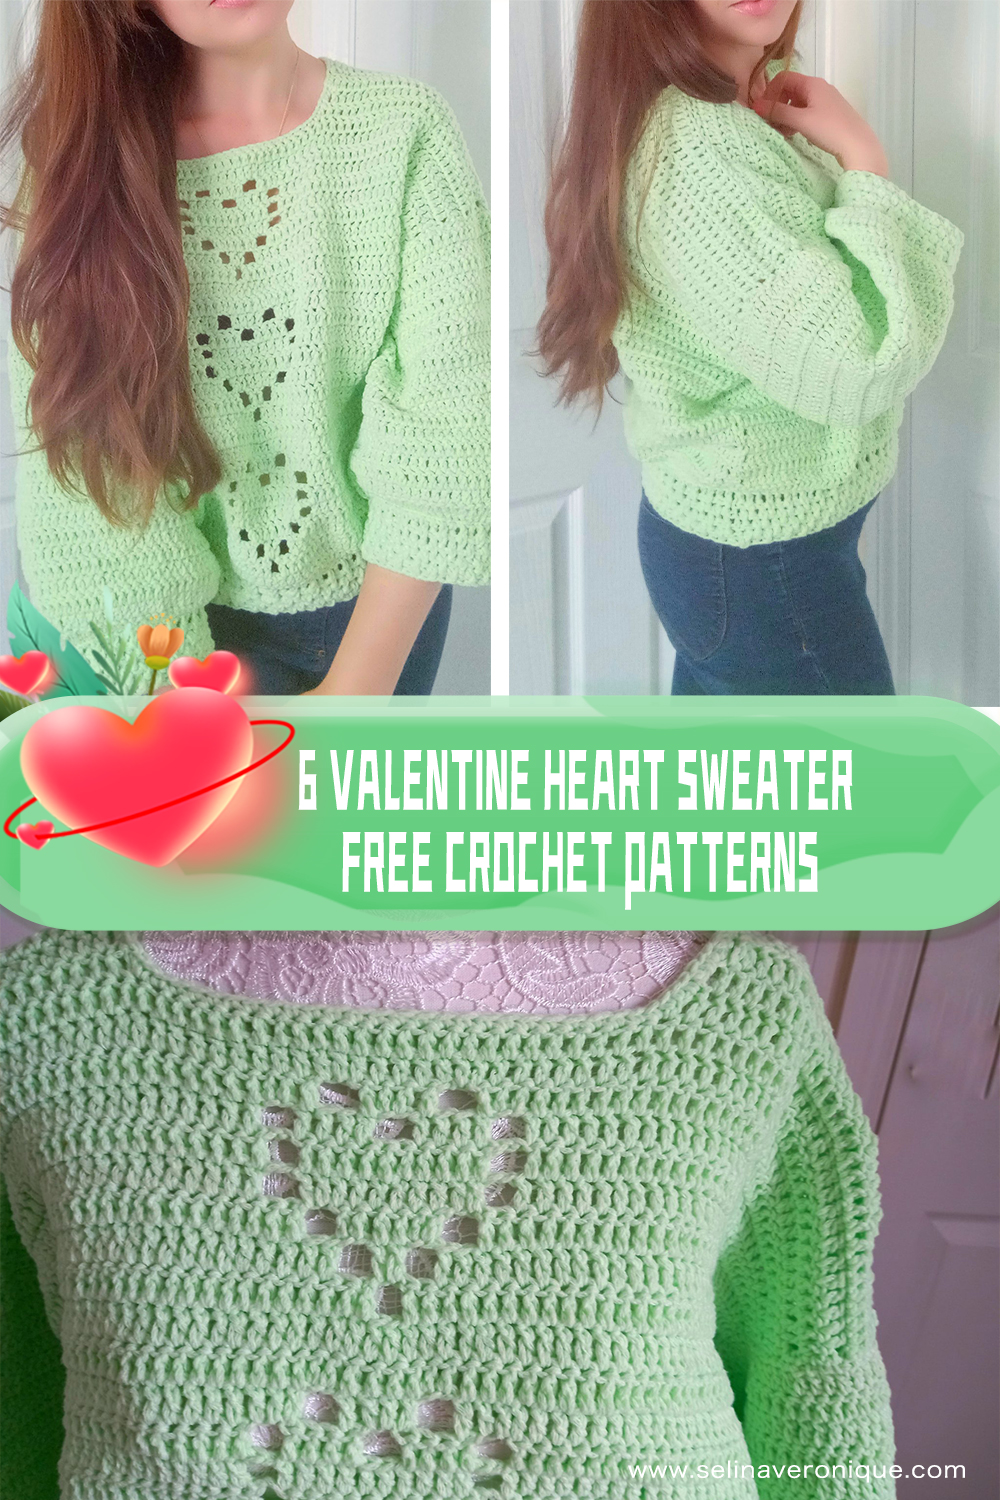 7 Valentine Heart Sweater FREE Crochet Patterns